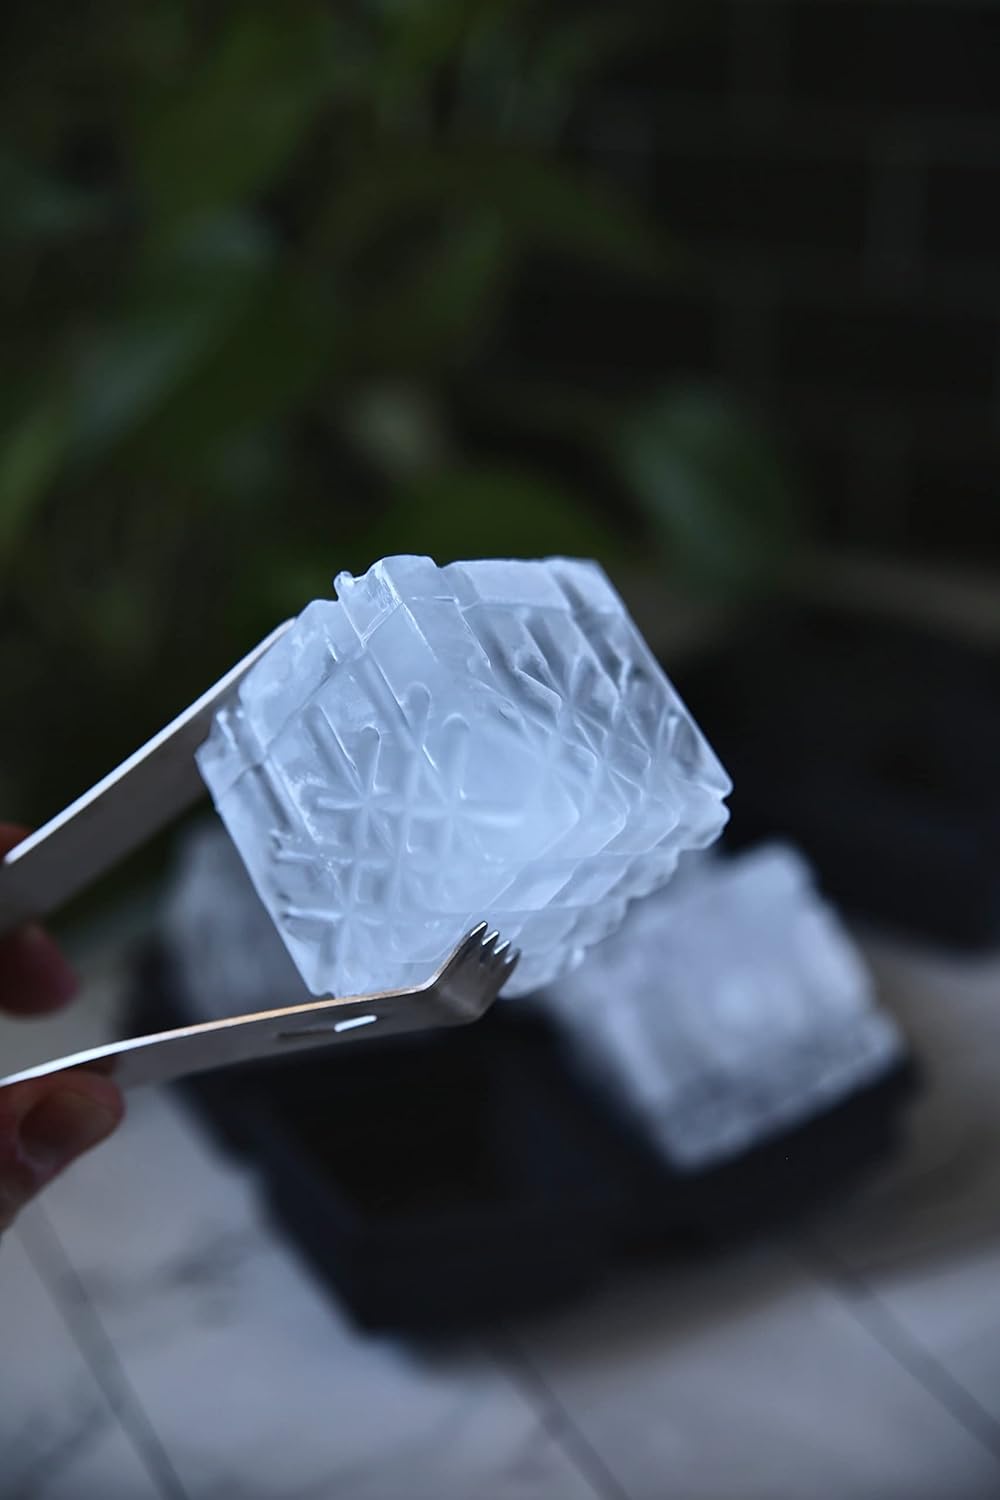 Cocktail Ice Crystal - Peak Ice Works Chorcoal | قالب الثلج الكرستالي للكوكتيل